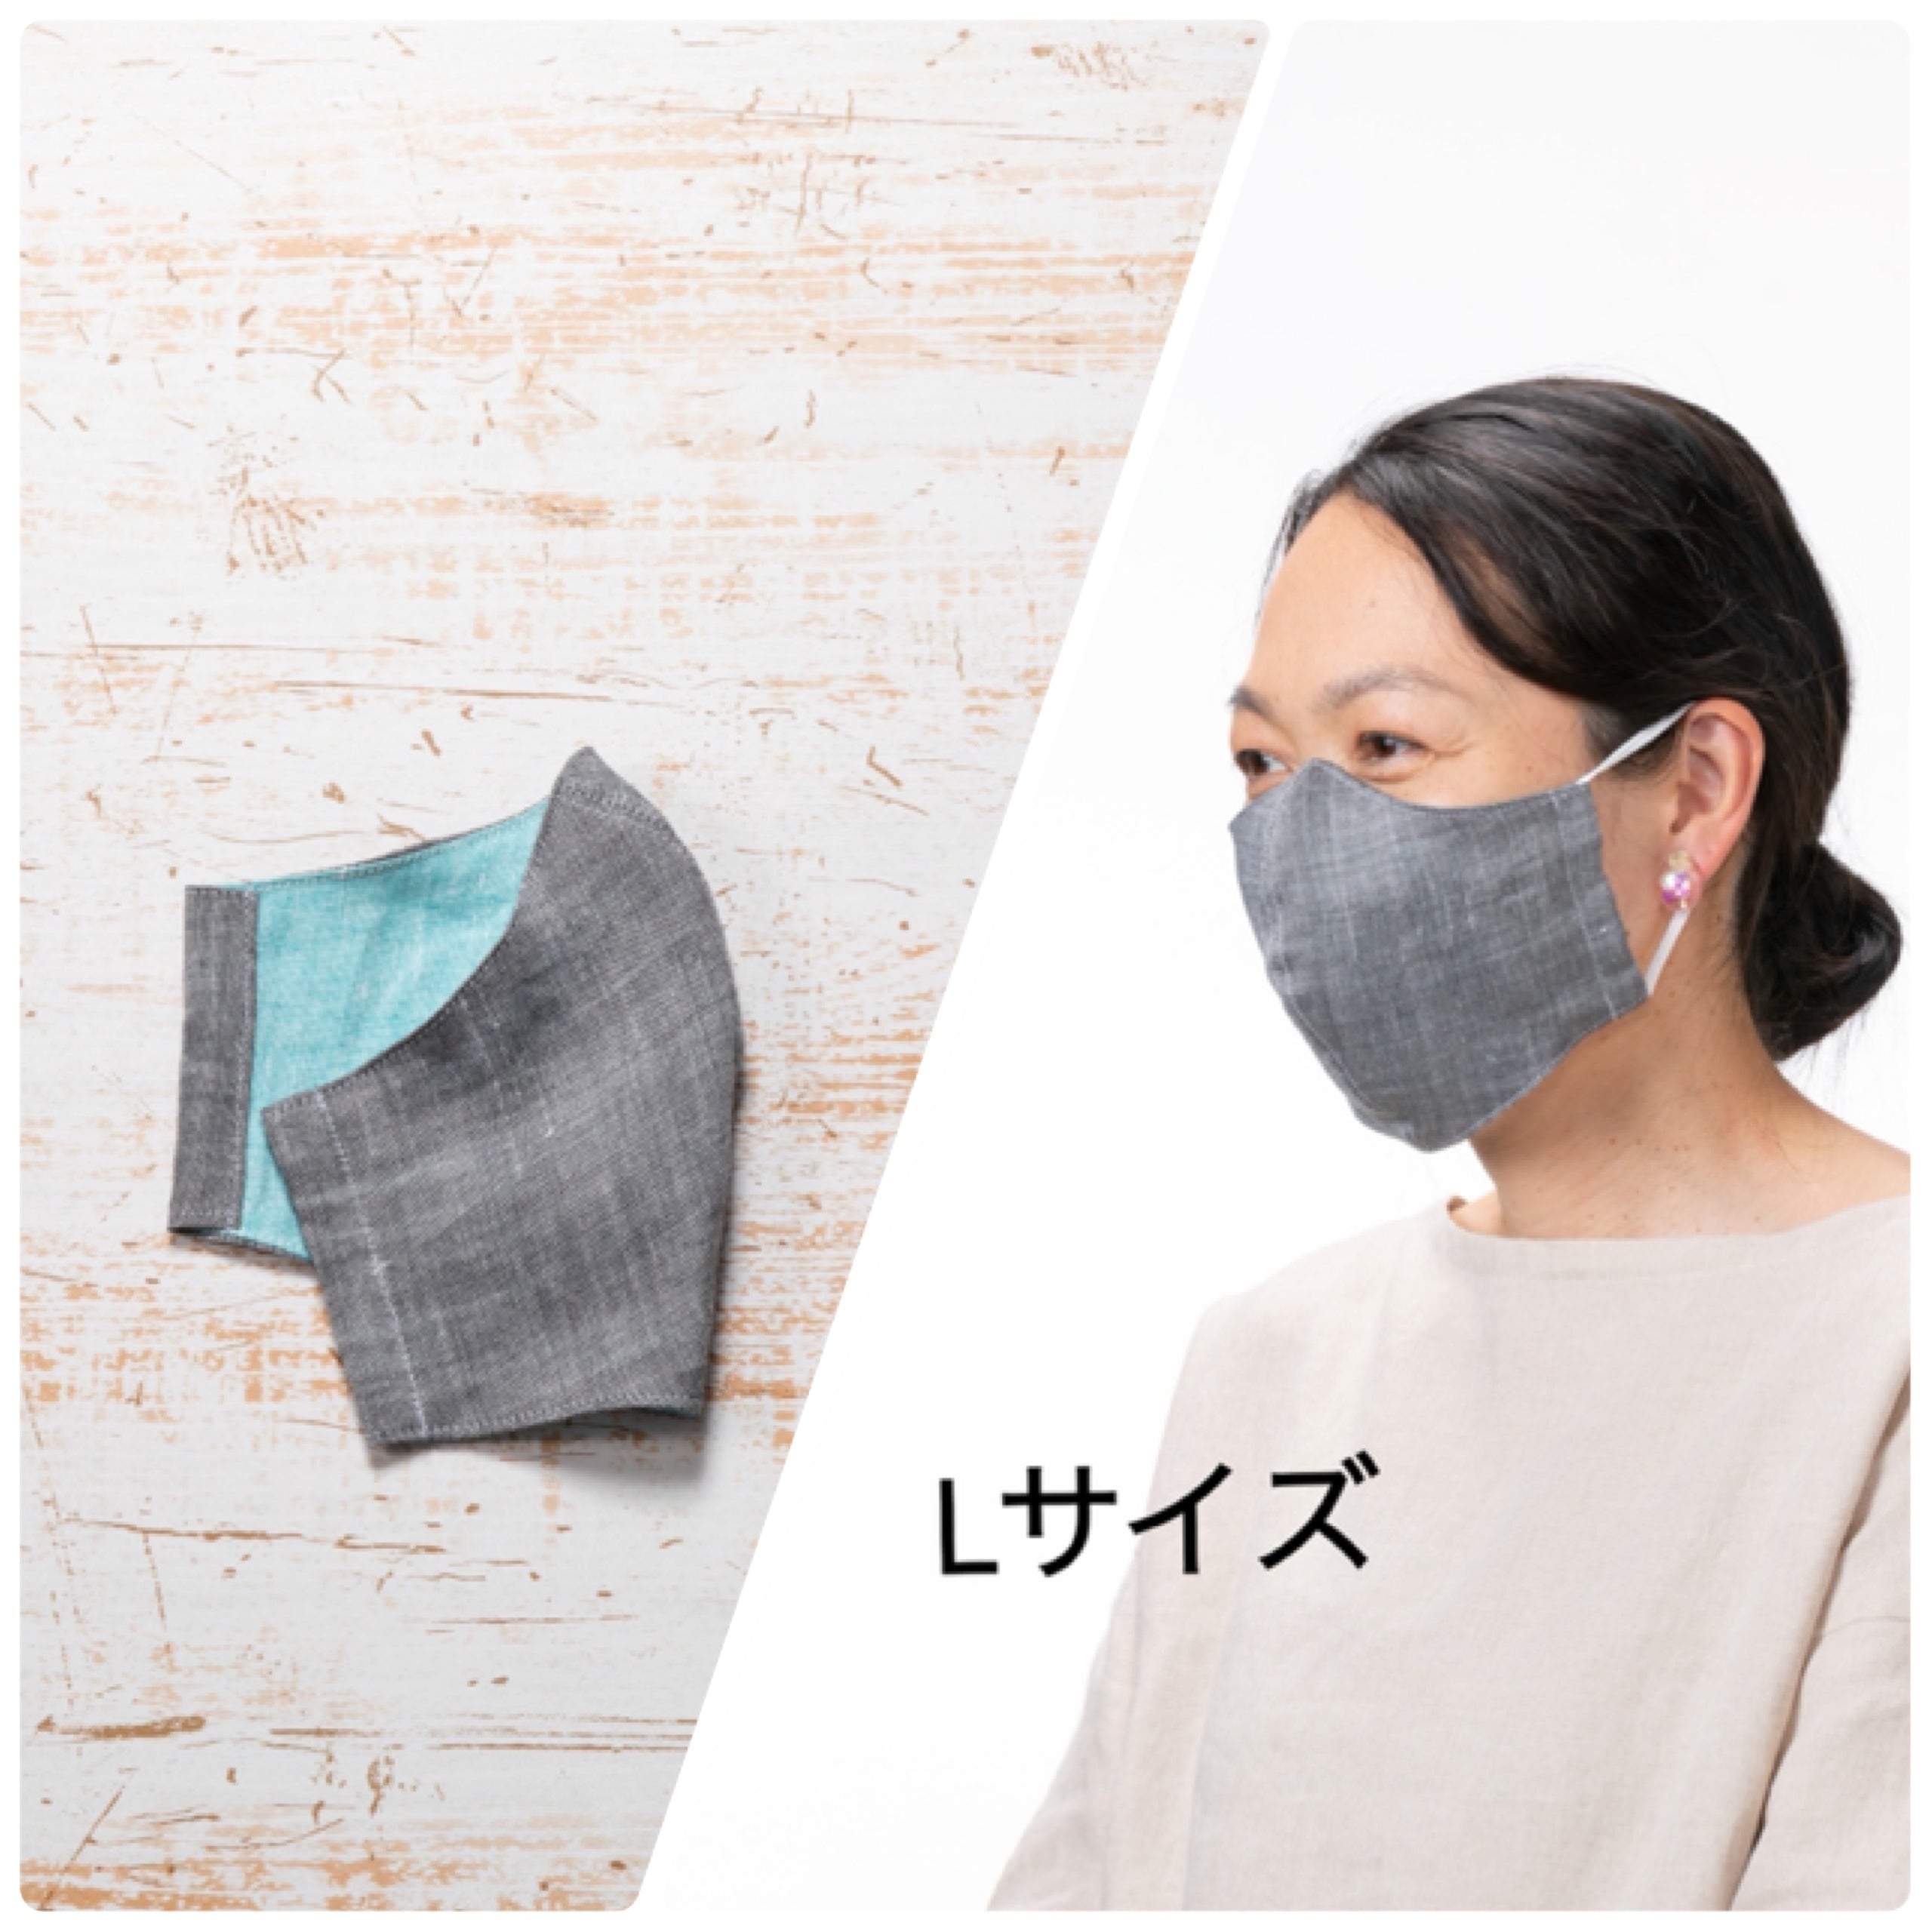 Omi-Jofu カラー裏地でお化粧移りが目立ちにくいマスク